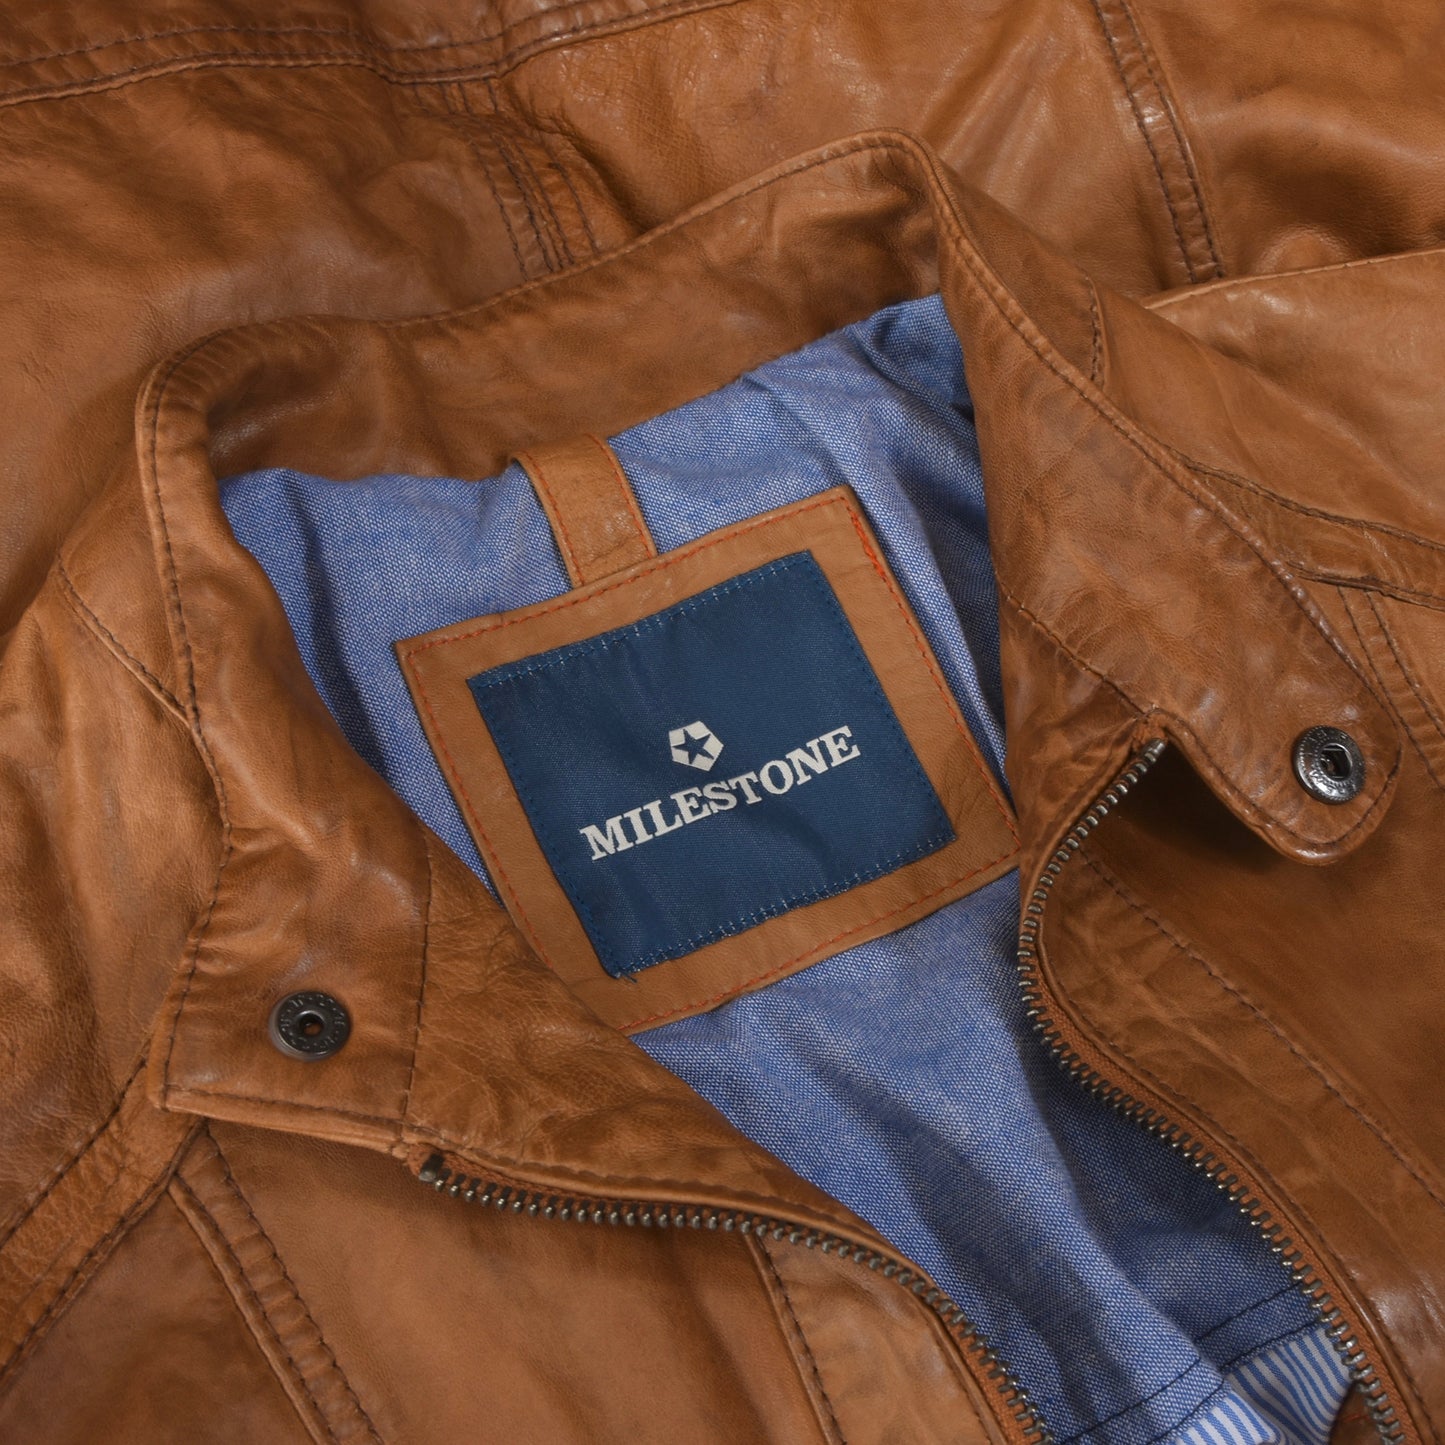 Milestone Lamb Leather Jacket Size 48/S - Tan